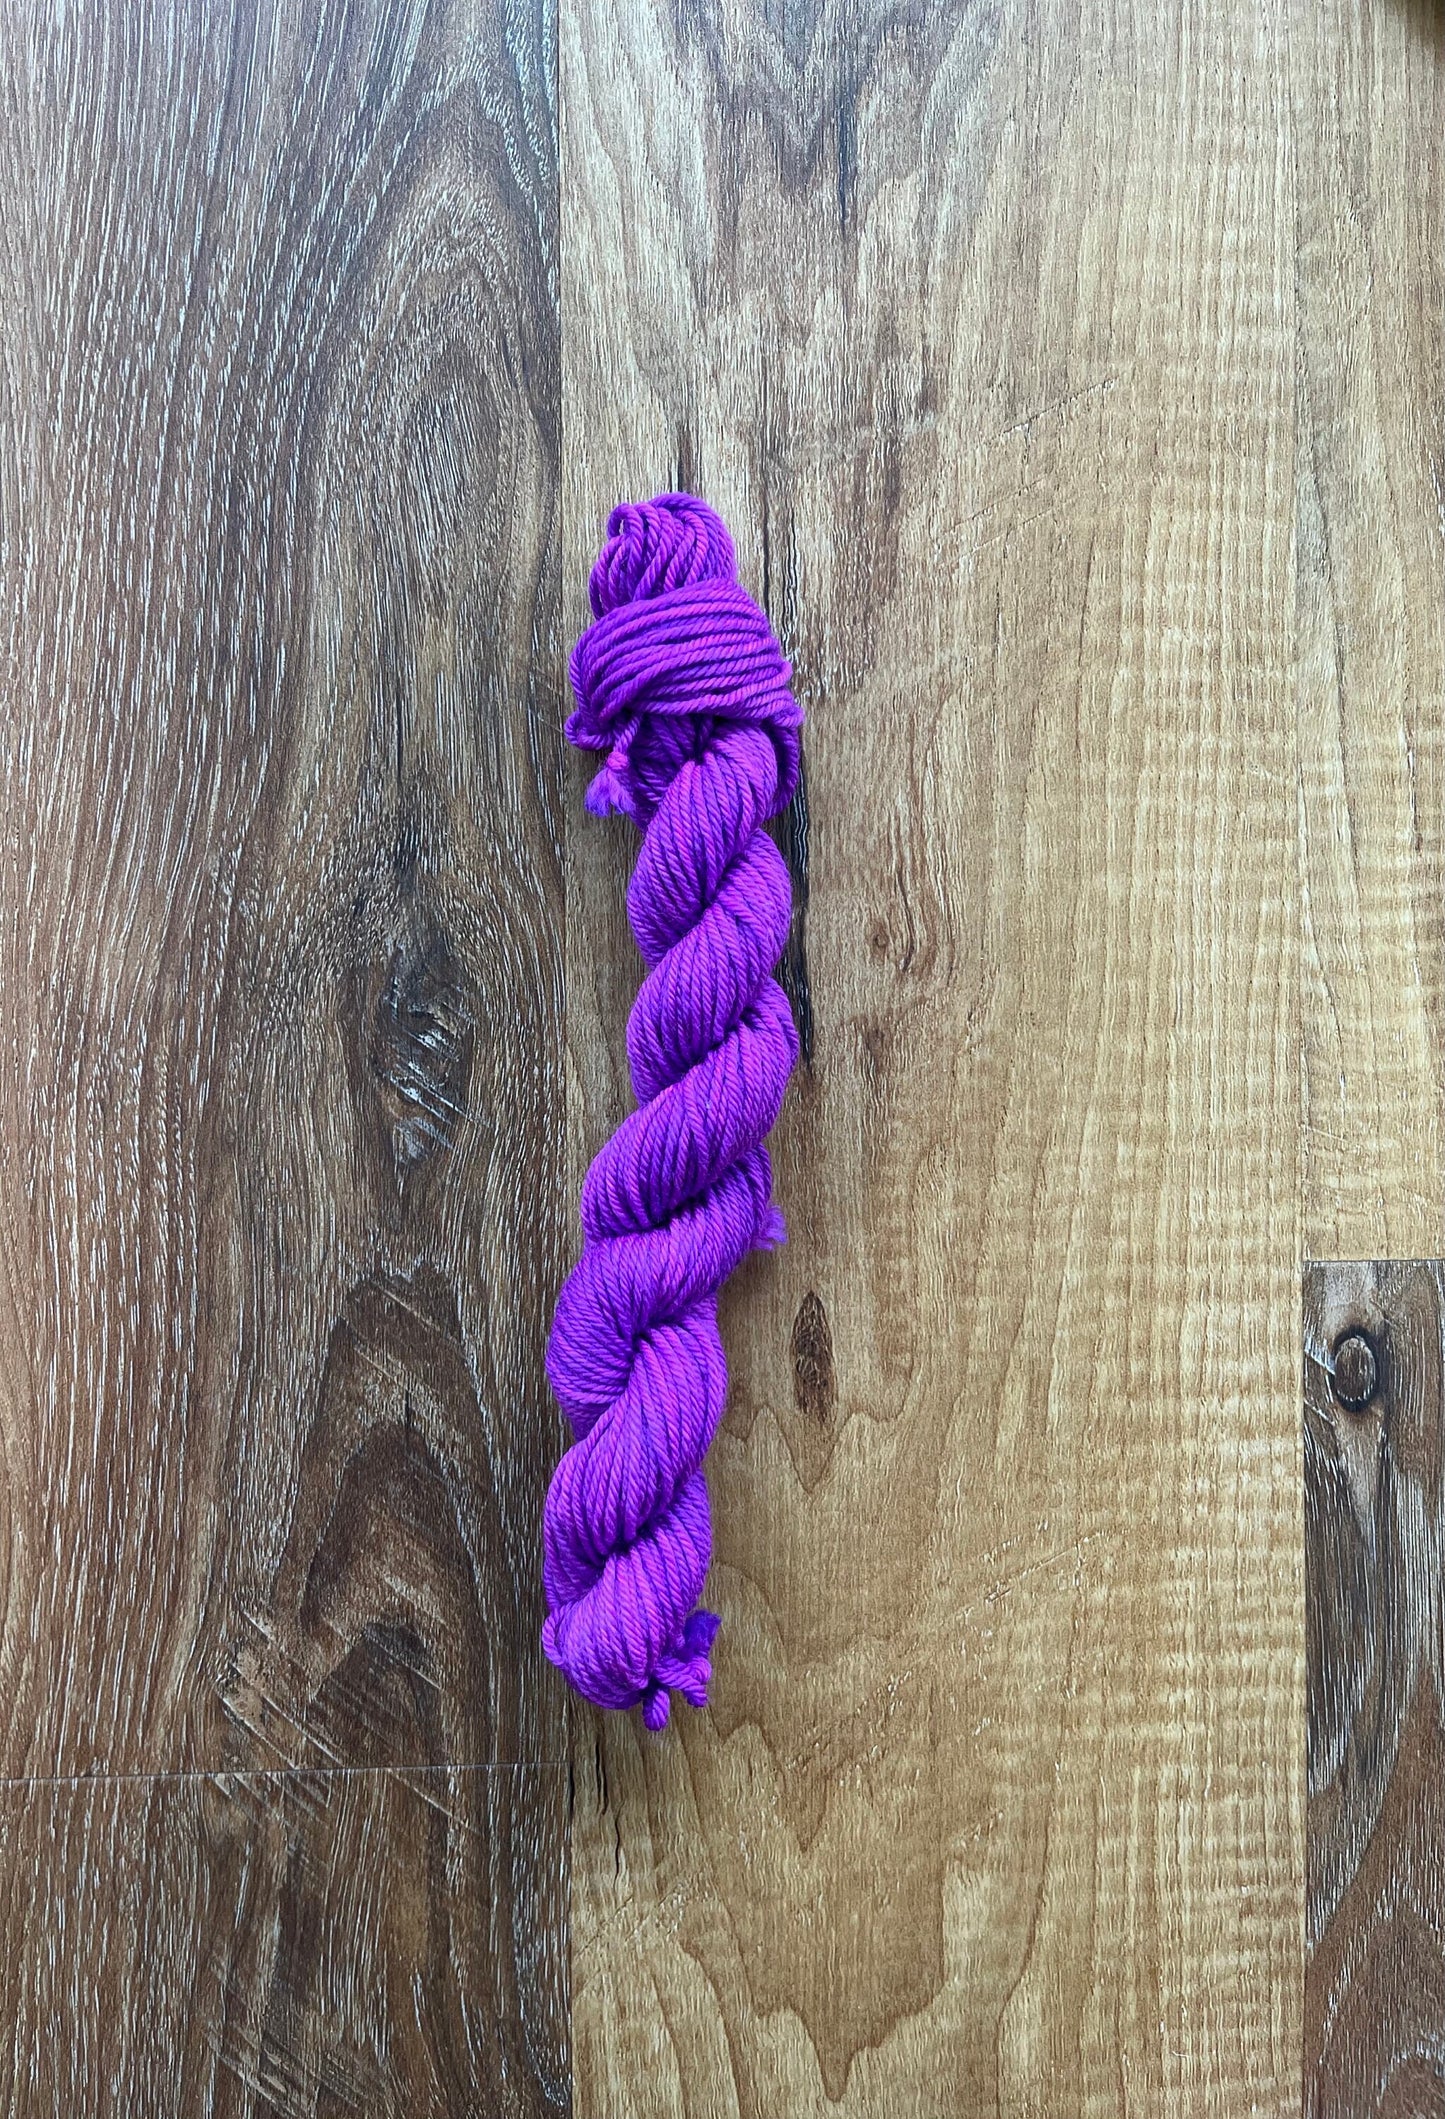 Polypocket Purple (Yarn Dyed to Order) 3-4 weeks turnaround time